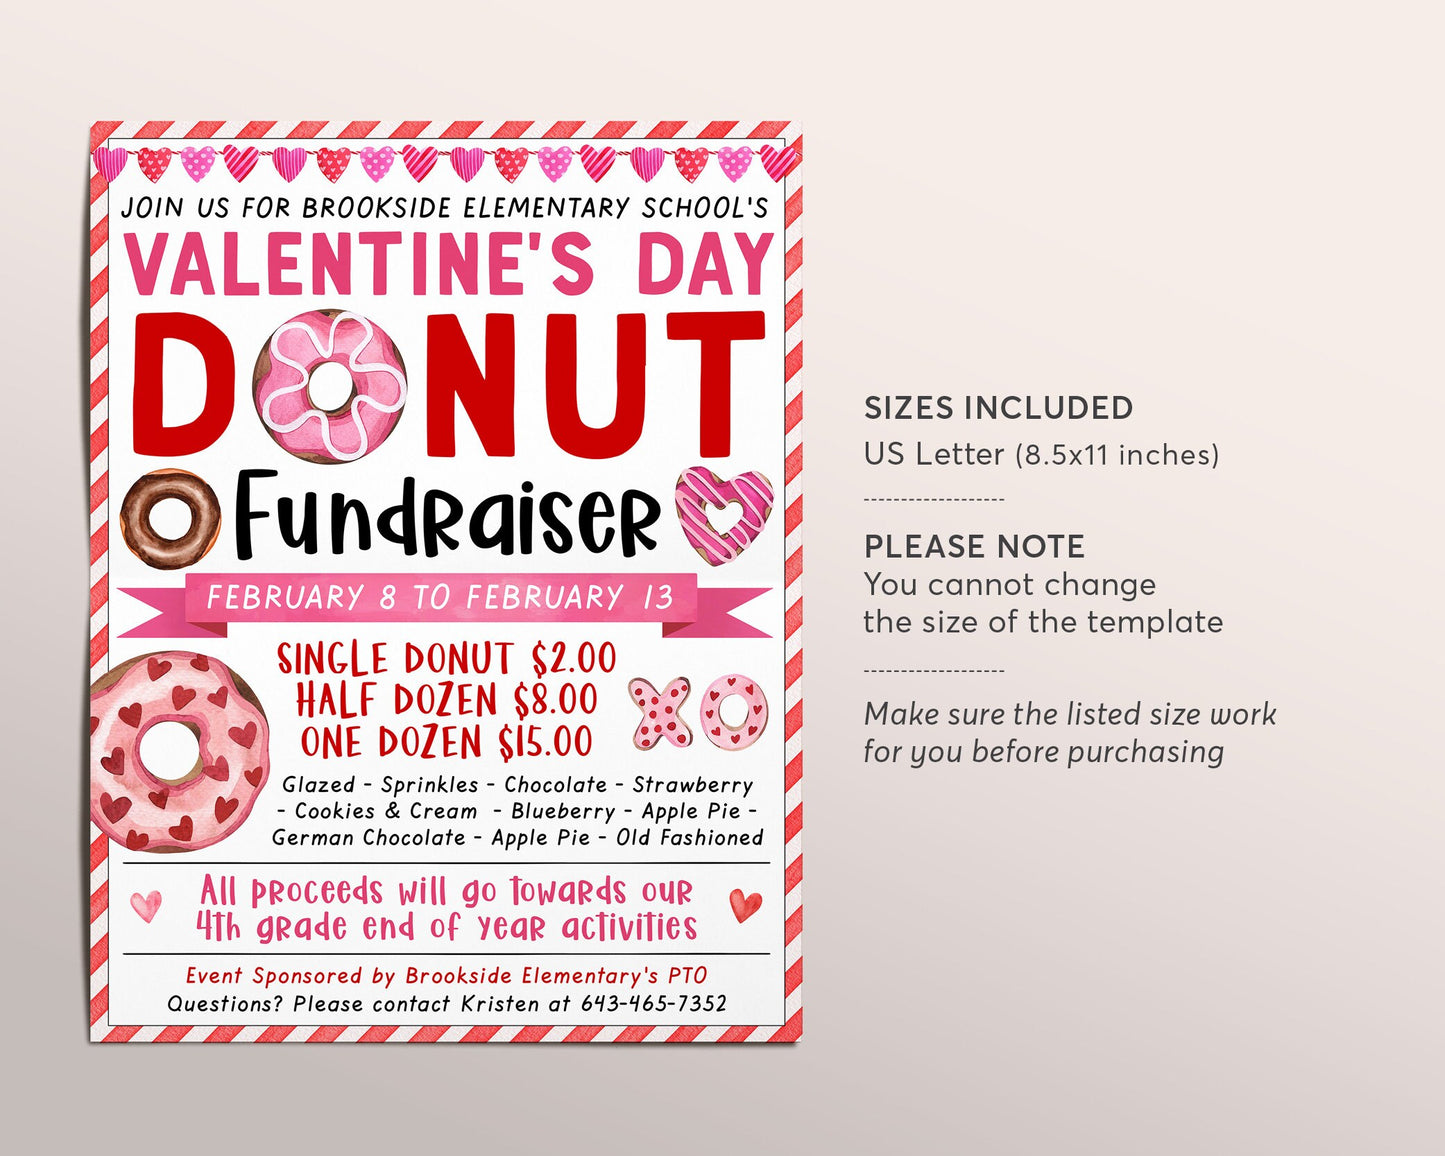 Valentine's Day Donut Fundraiser Flyer Editable Template, Valentine Bake Sale Donuts Fundraising Sale Event, PTA PTO School Nonprofit Church